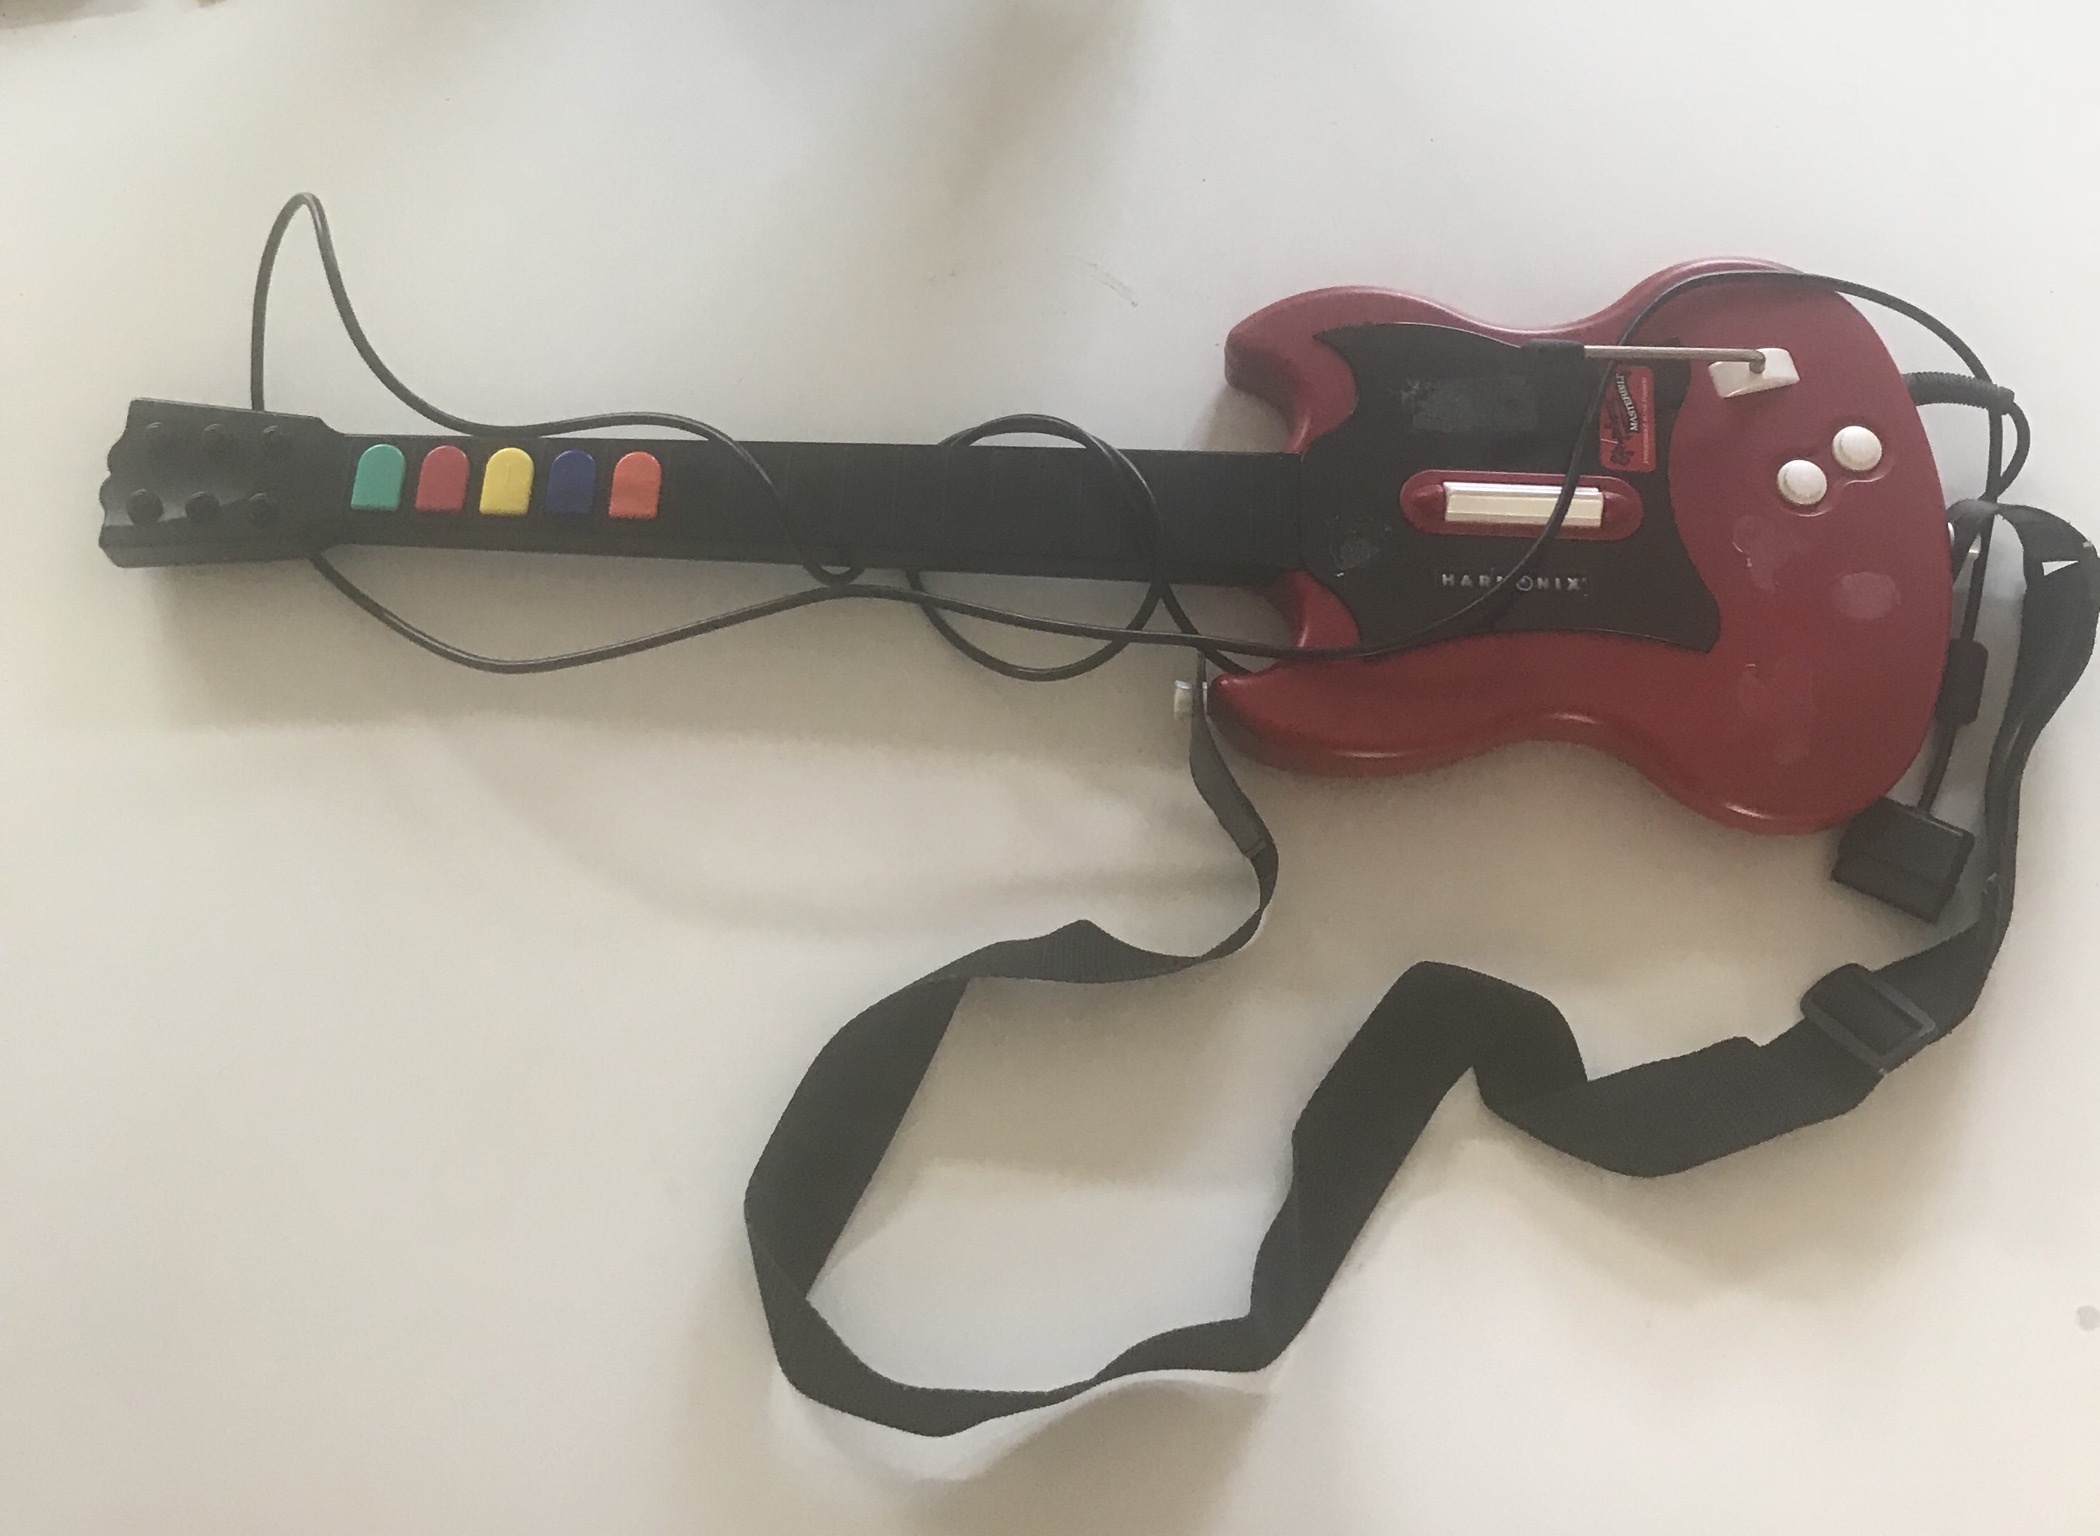 can you take apart a ps2 guitar hero guitar